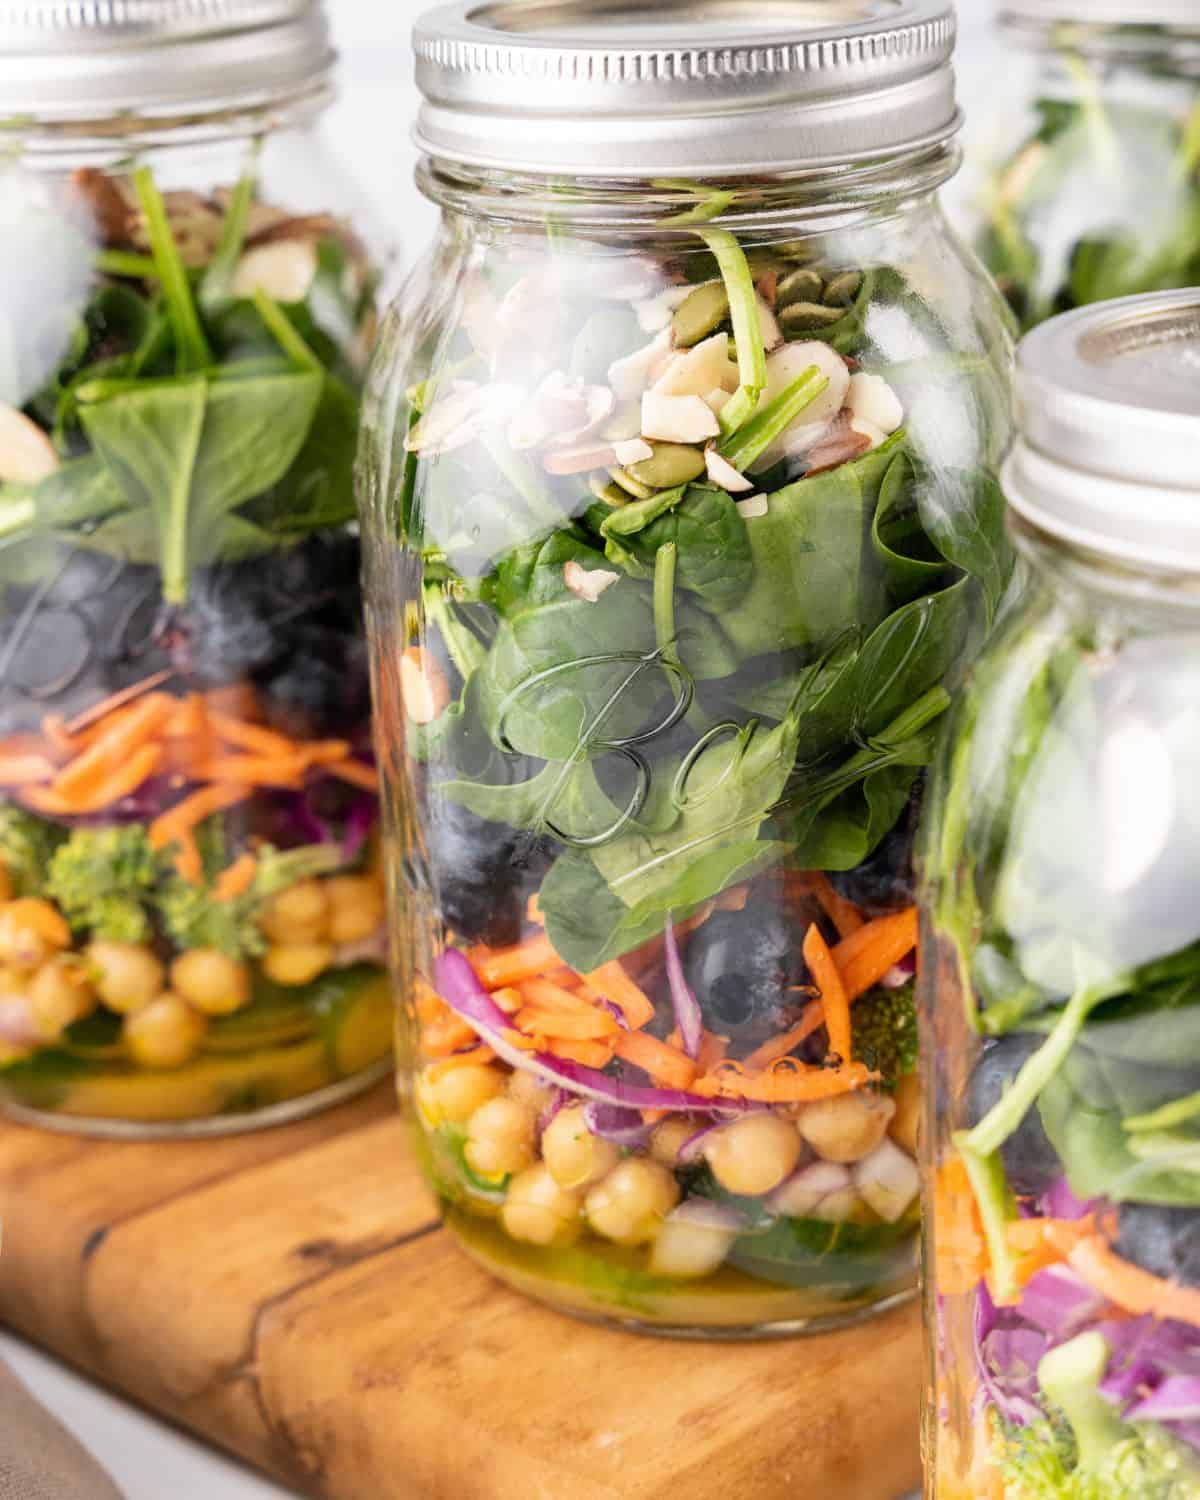 https://www.organizeyourselfskinny.com/wp-content/uploads/2023/03/closeup-view-of-detox-salad-in-a-jar.jpg